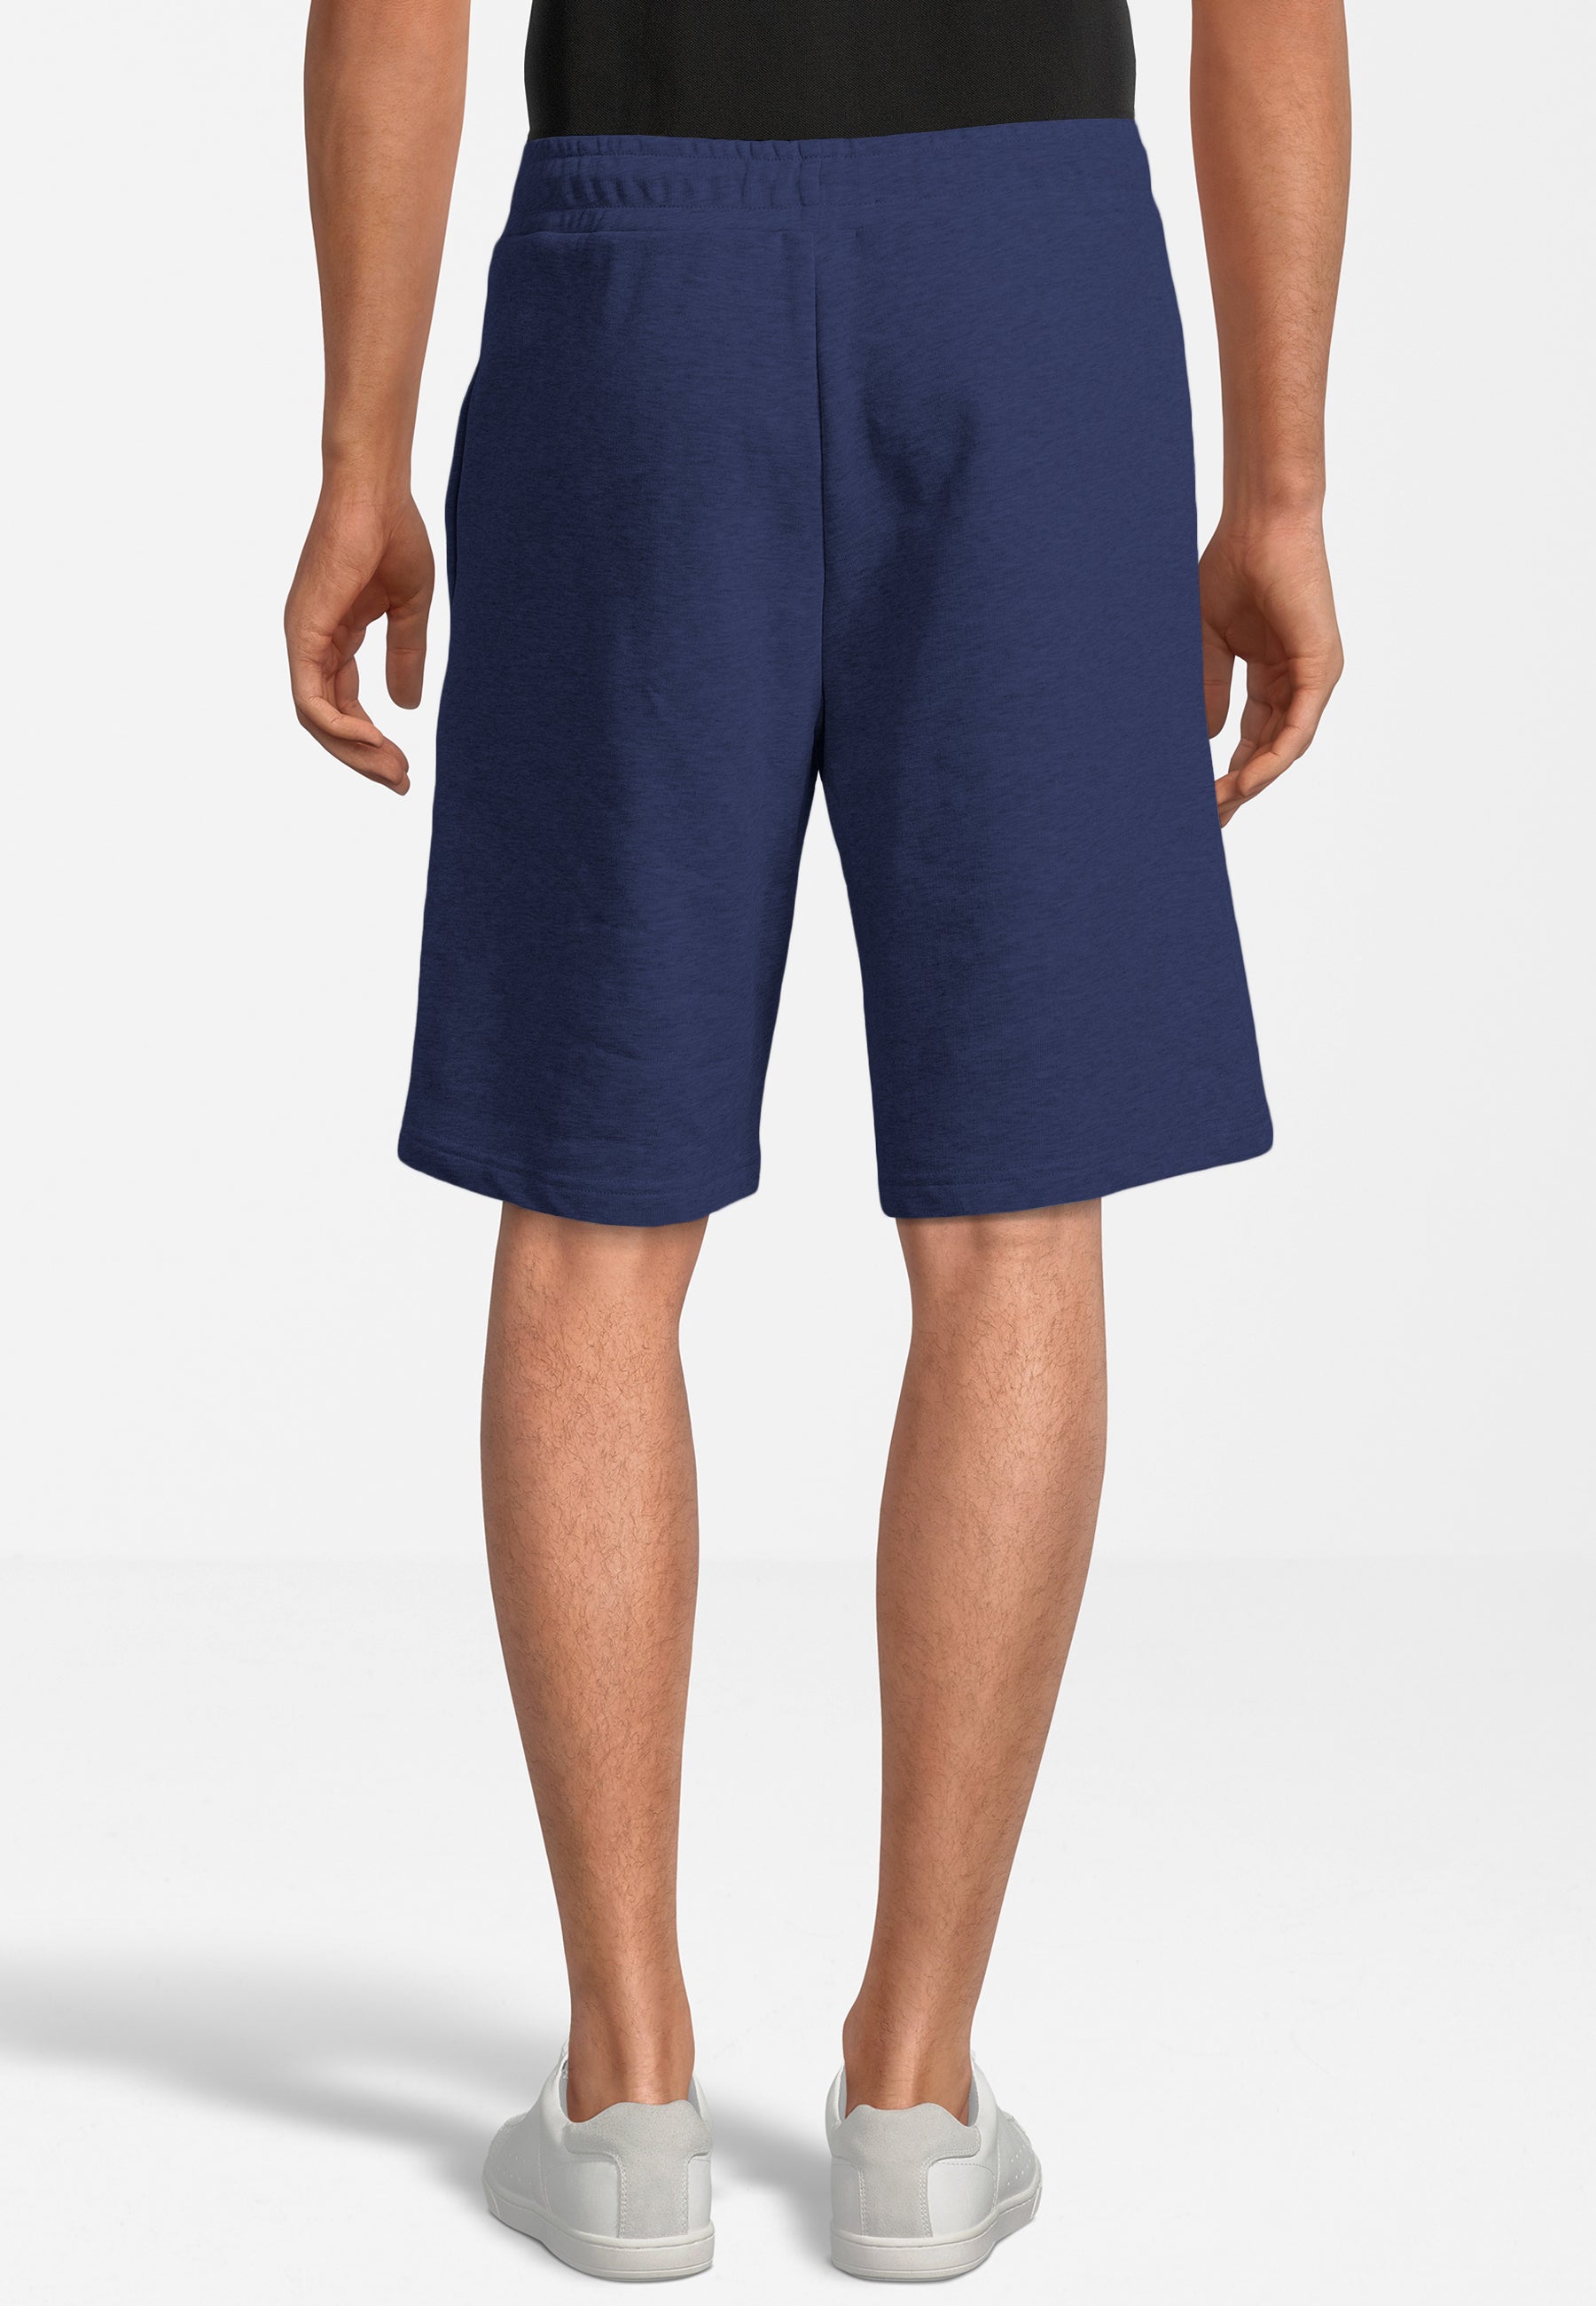 Blehen Sweat Shorts in Medieval Blue Shorts Fila   